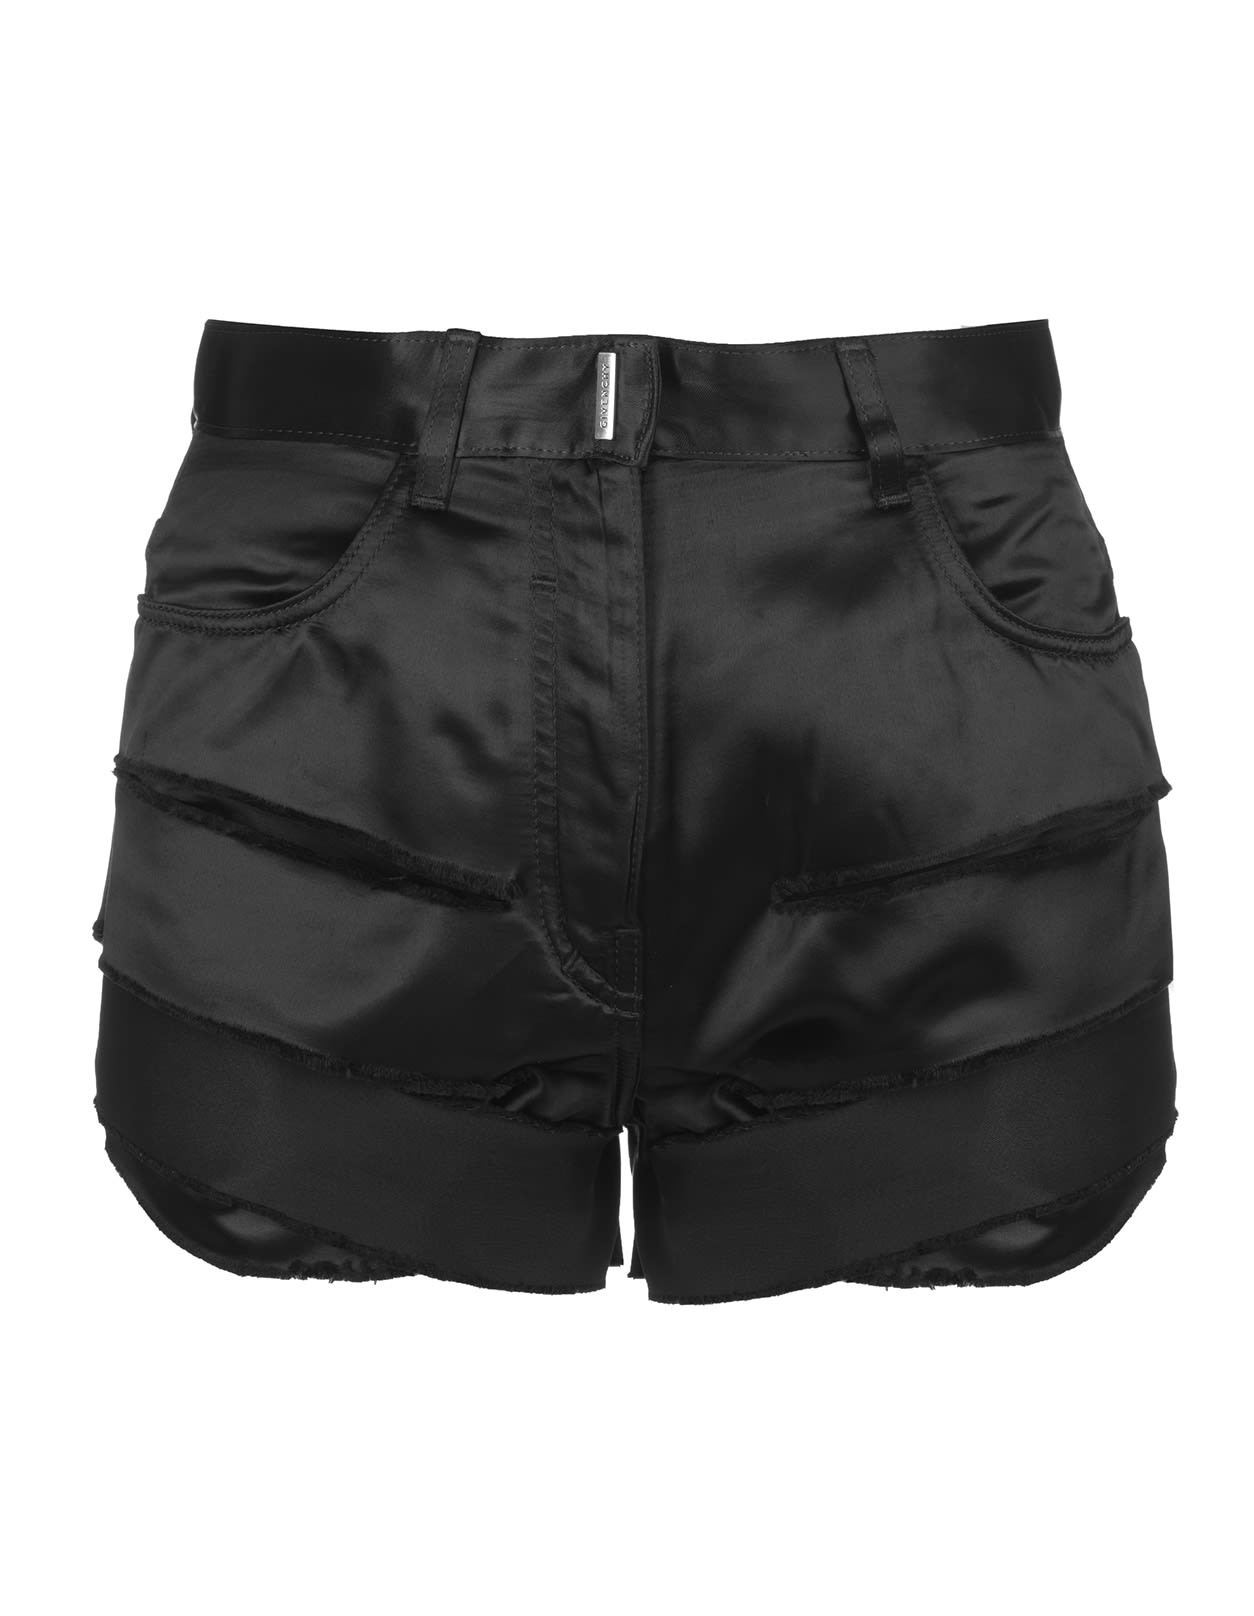 Givenchy Destroyed Effect Black Satin Shorts